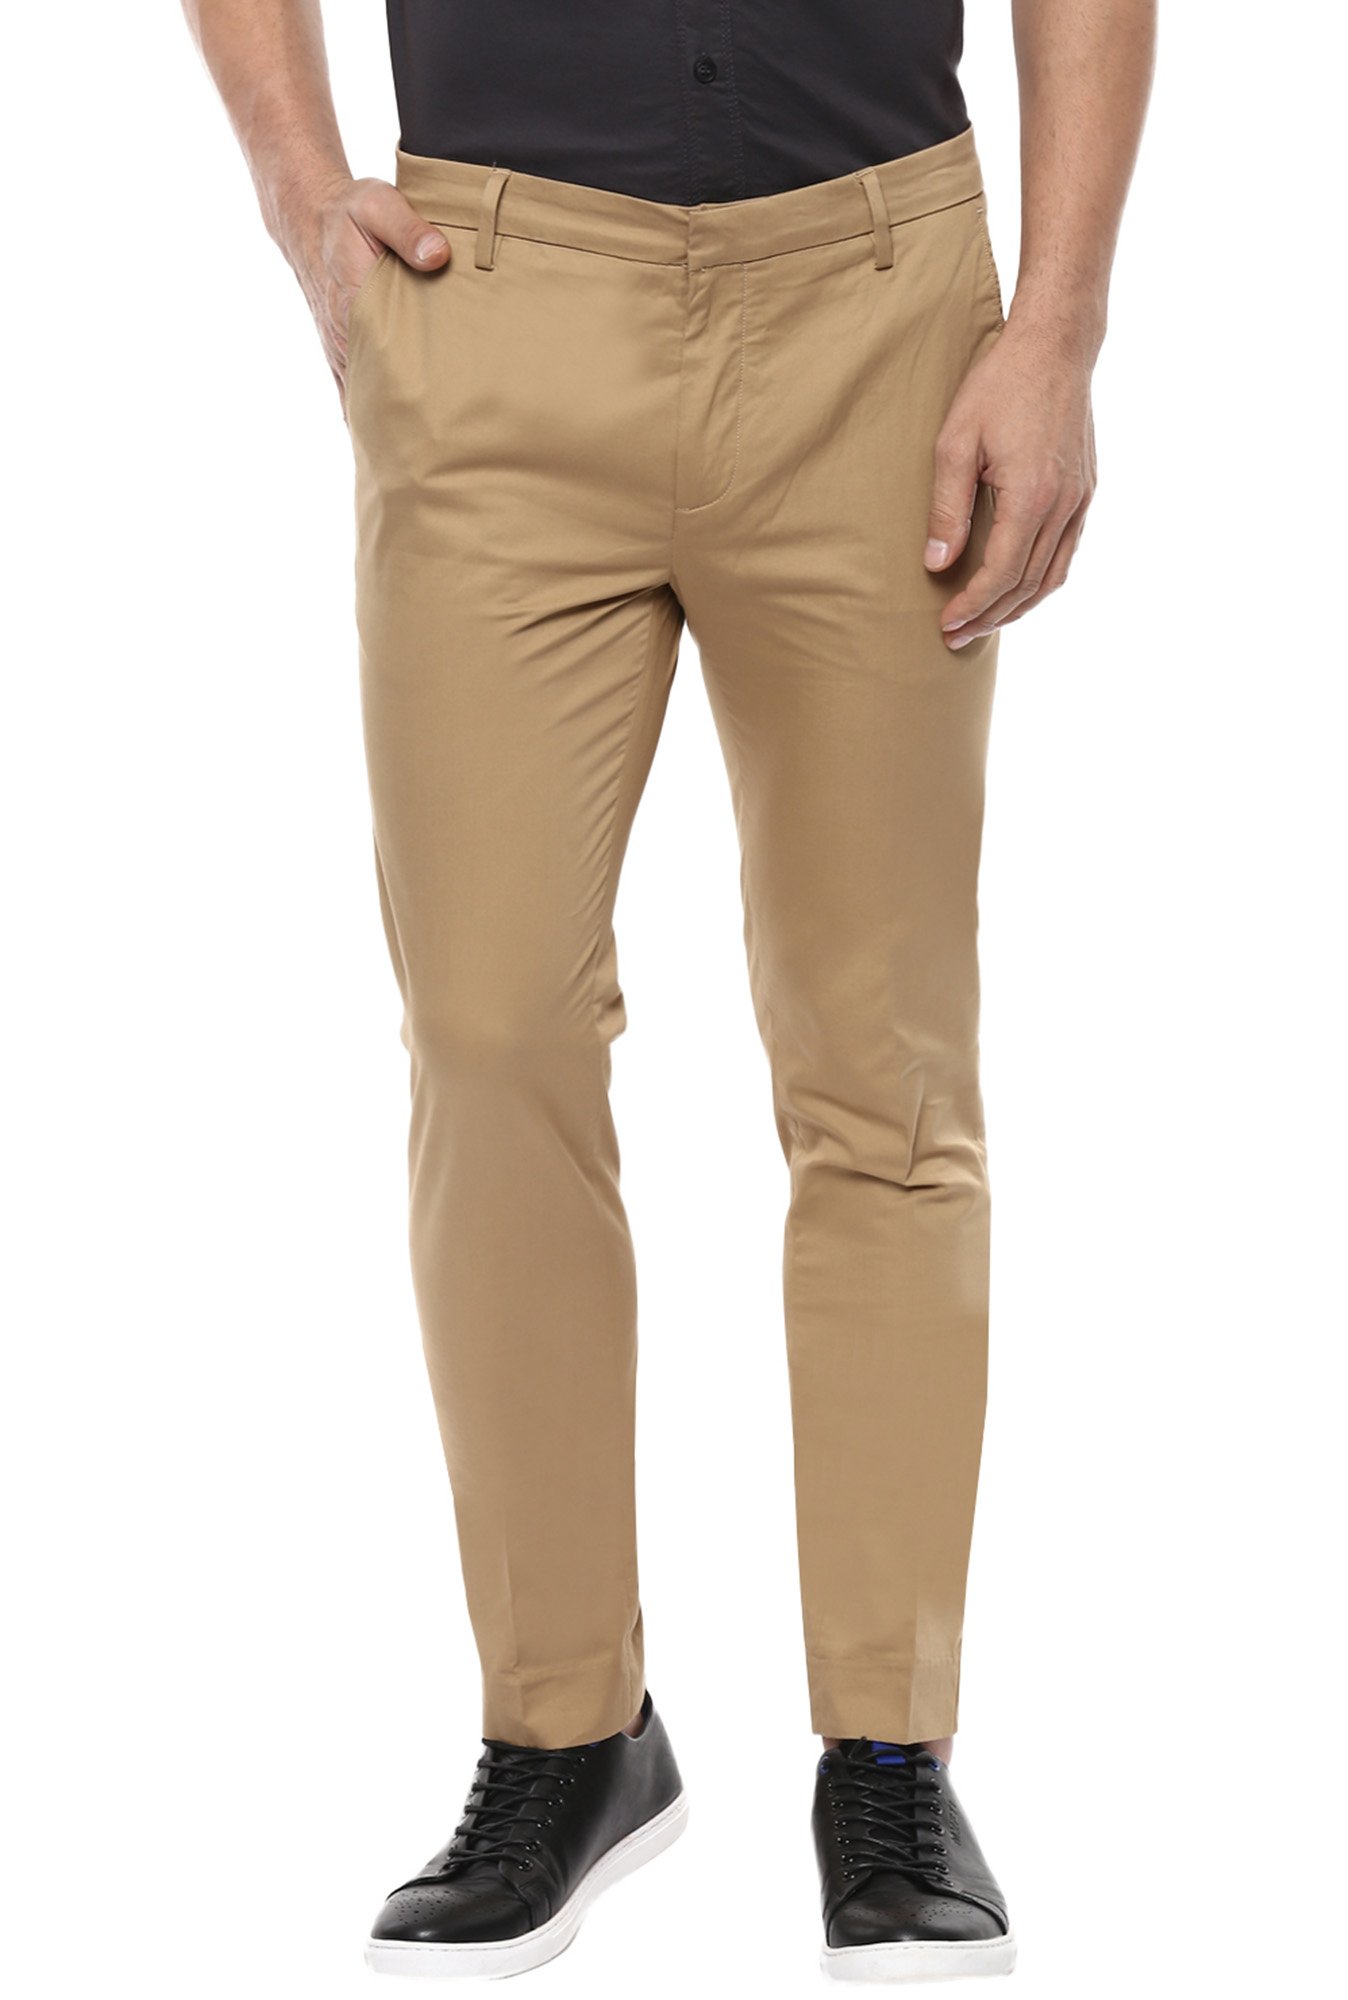 MUFTI Slim Fit Men Beige Trousers  Buy MUFTI Slim Fit Men Beige Trousers  Online at Best Prices in India  Flipkartcom